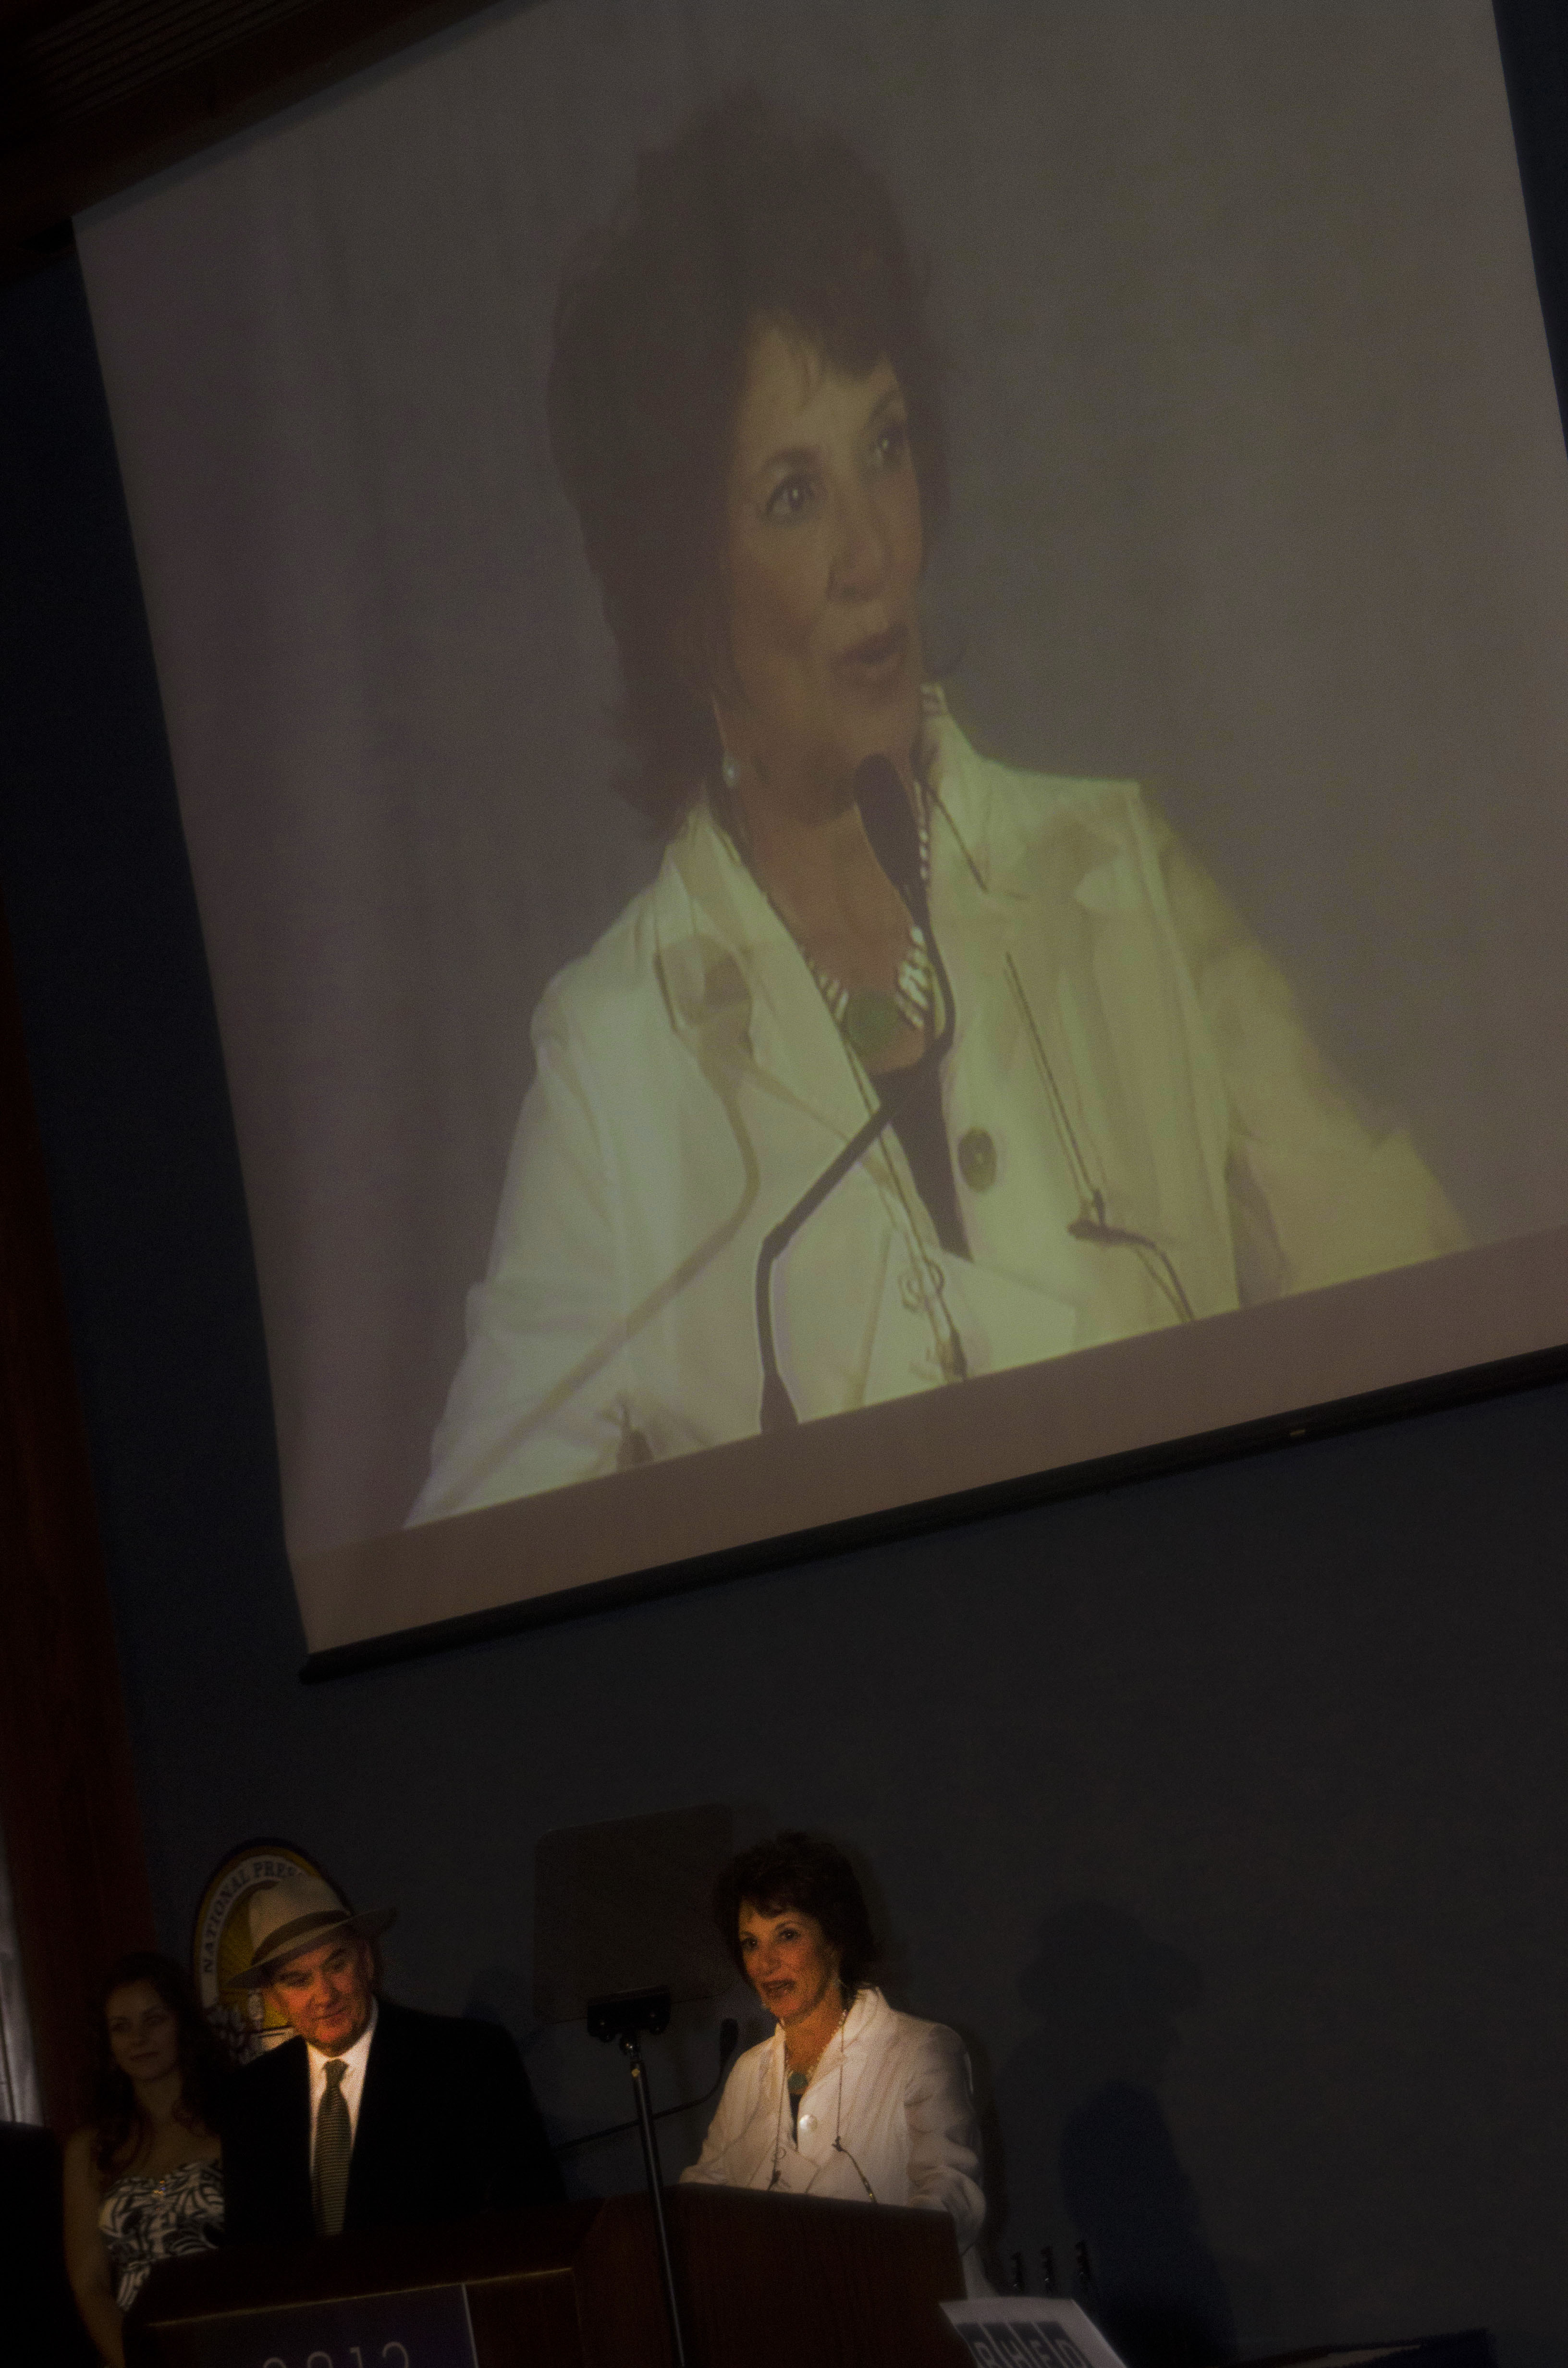 Peer Distinguished Achievement Award Recipient Linda Maslow Speaks to the crowd.